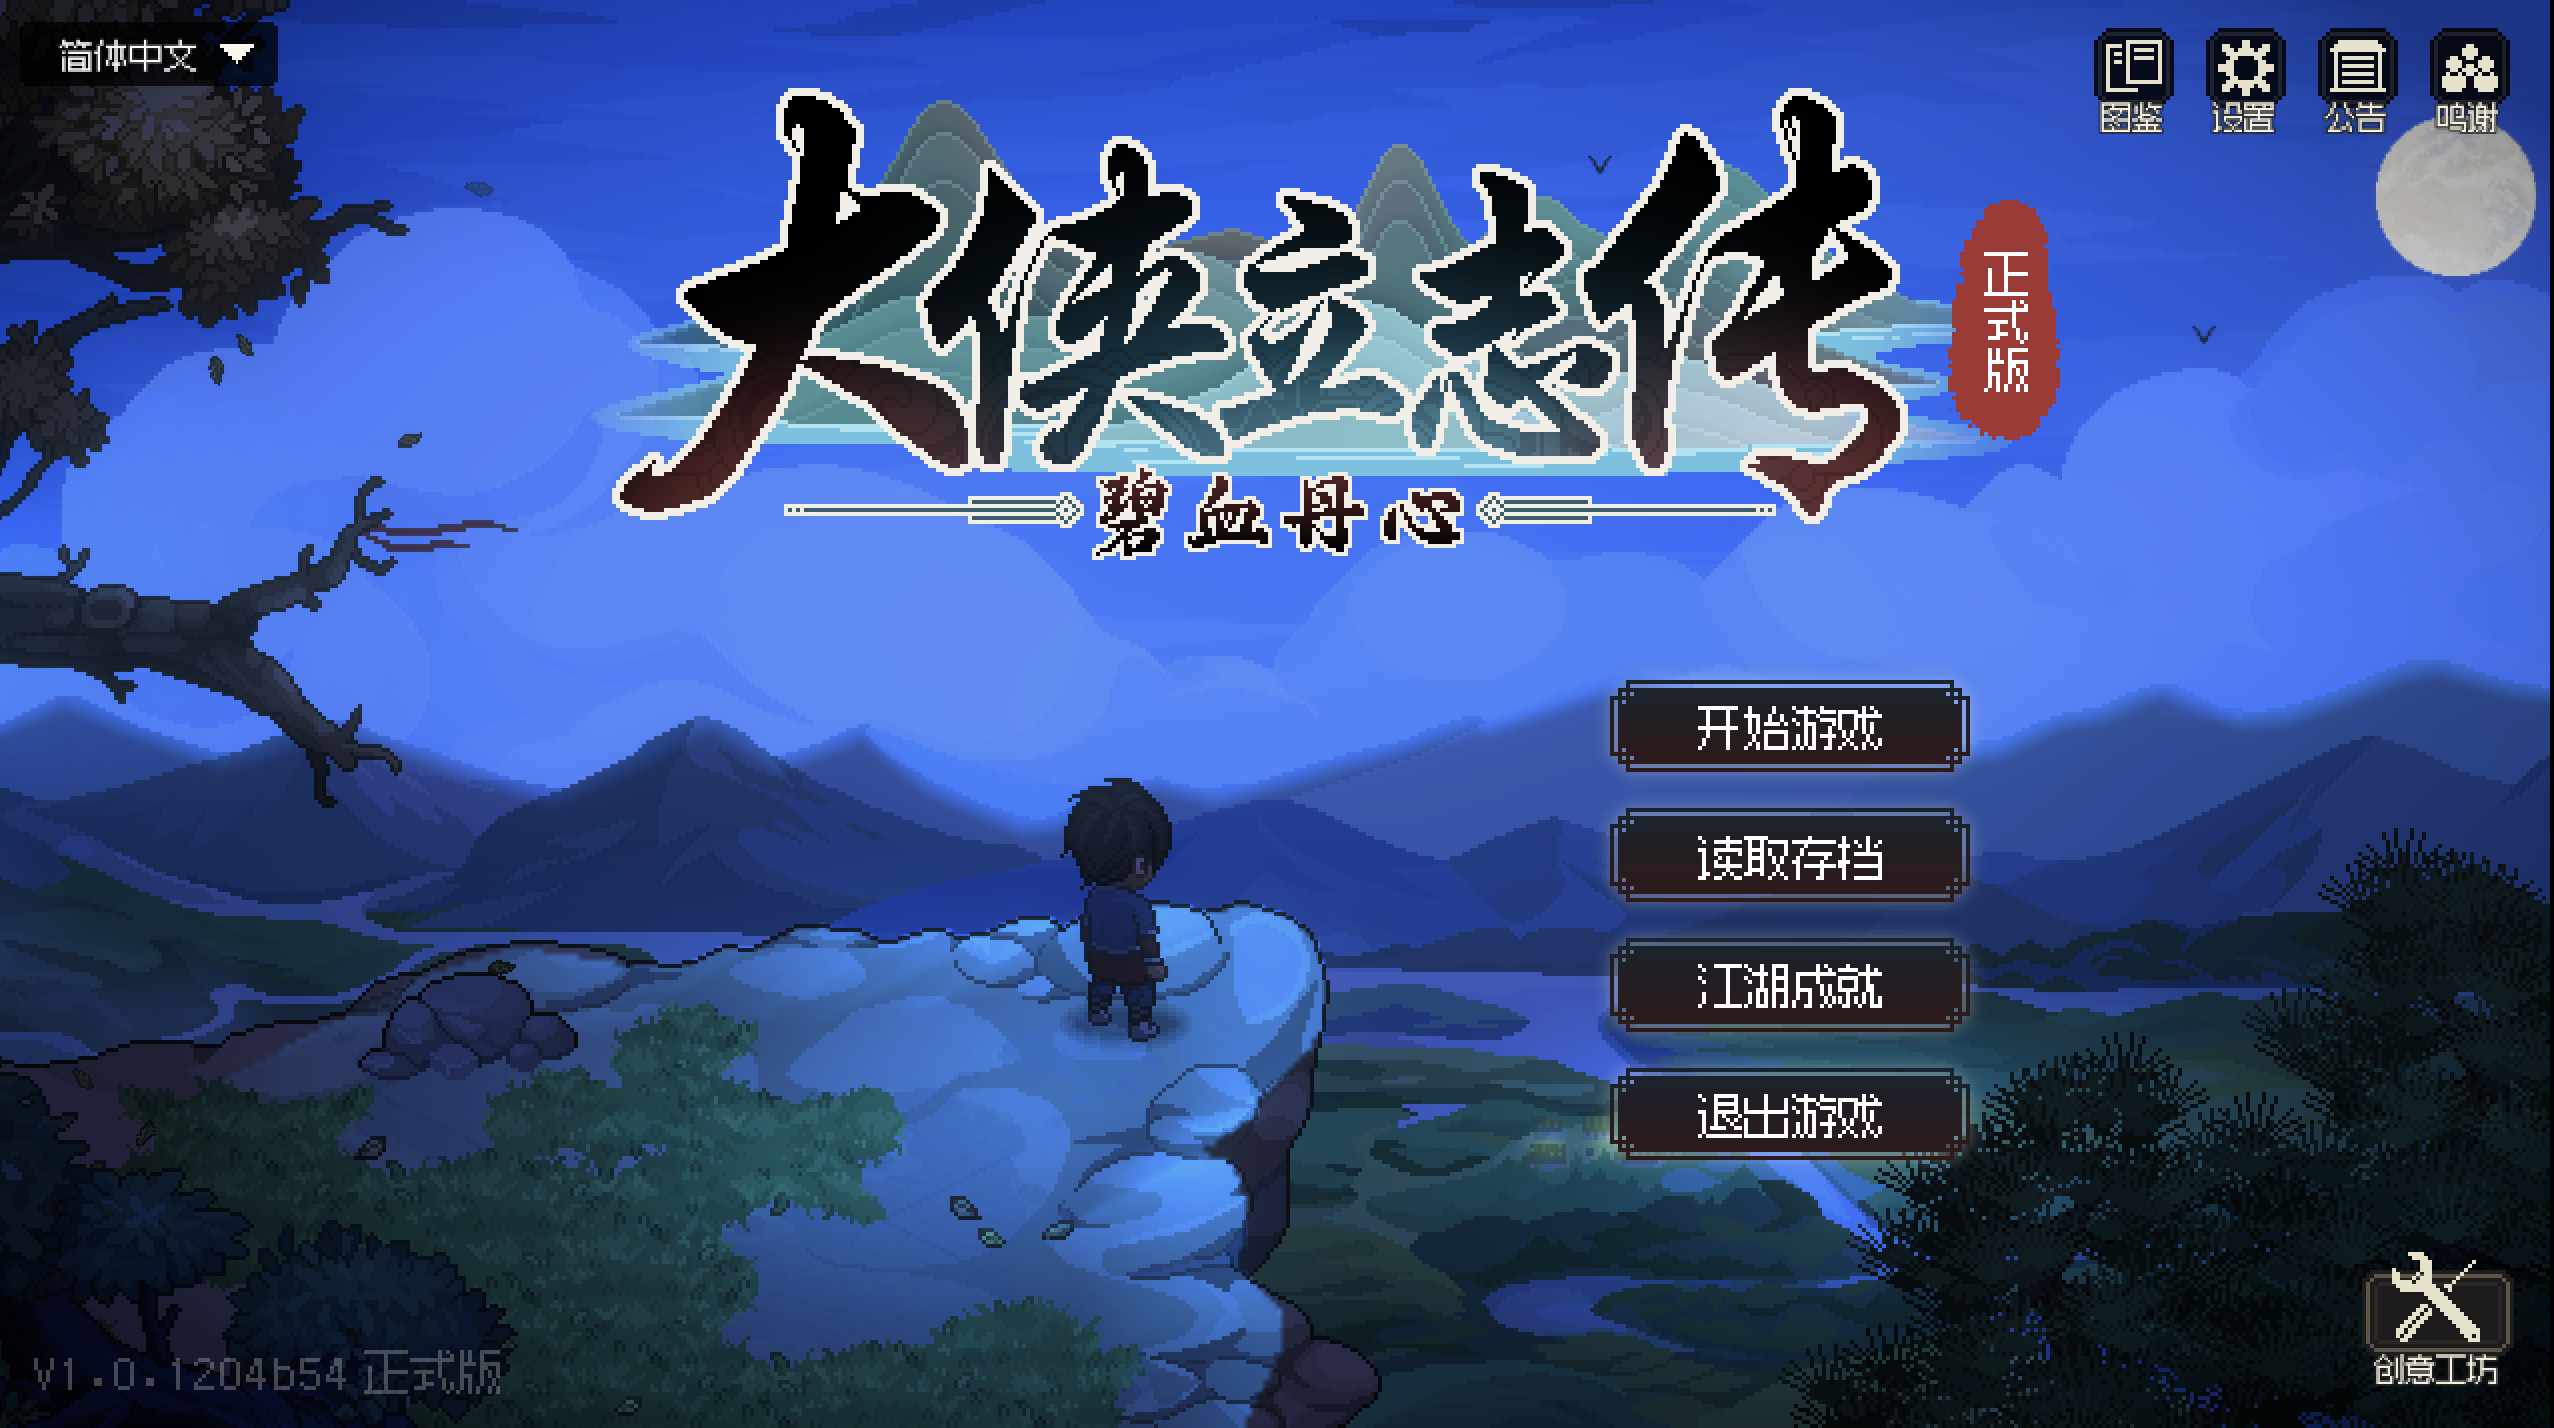 大侠立志传：碧血丹心 for Mac Hero’s Adventure v1.1.0204b57 中文移植版